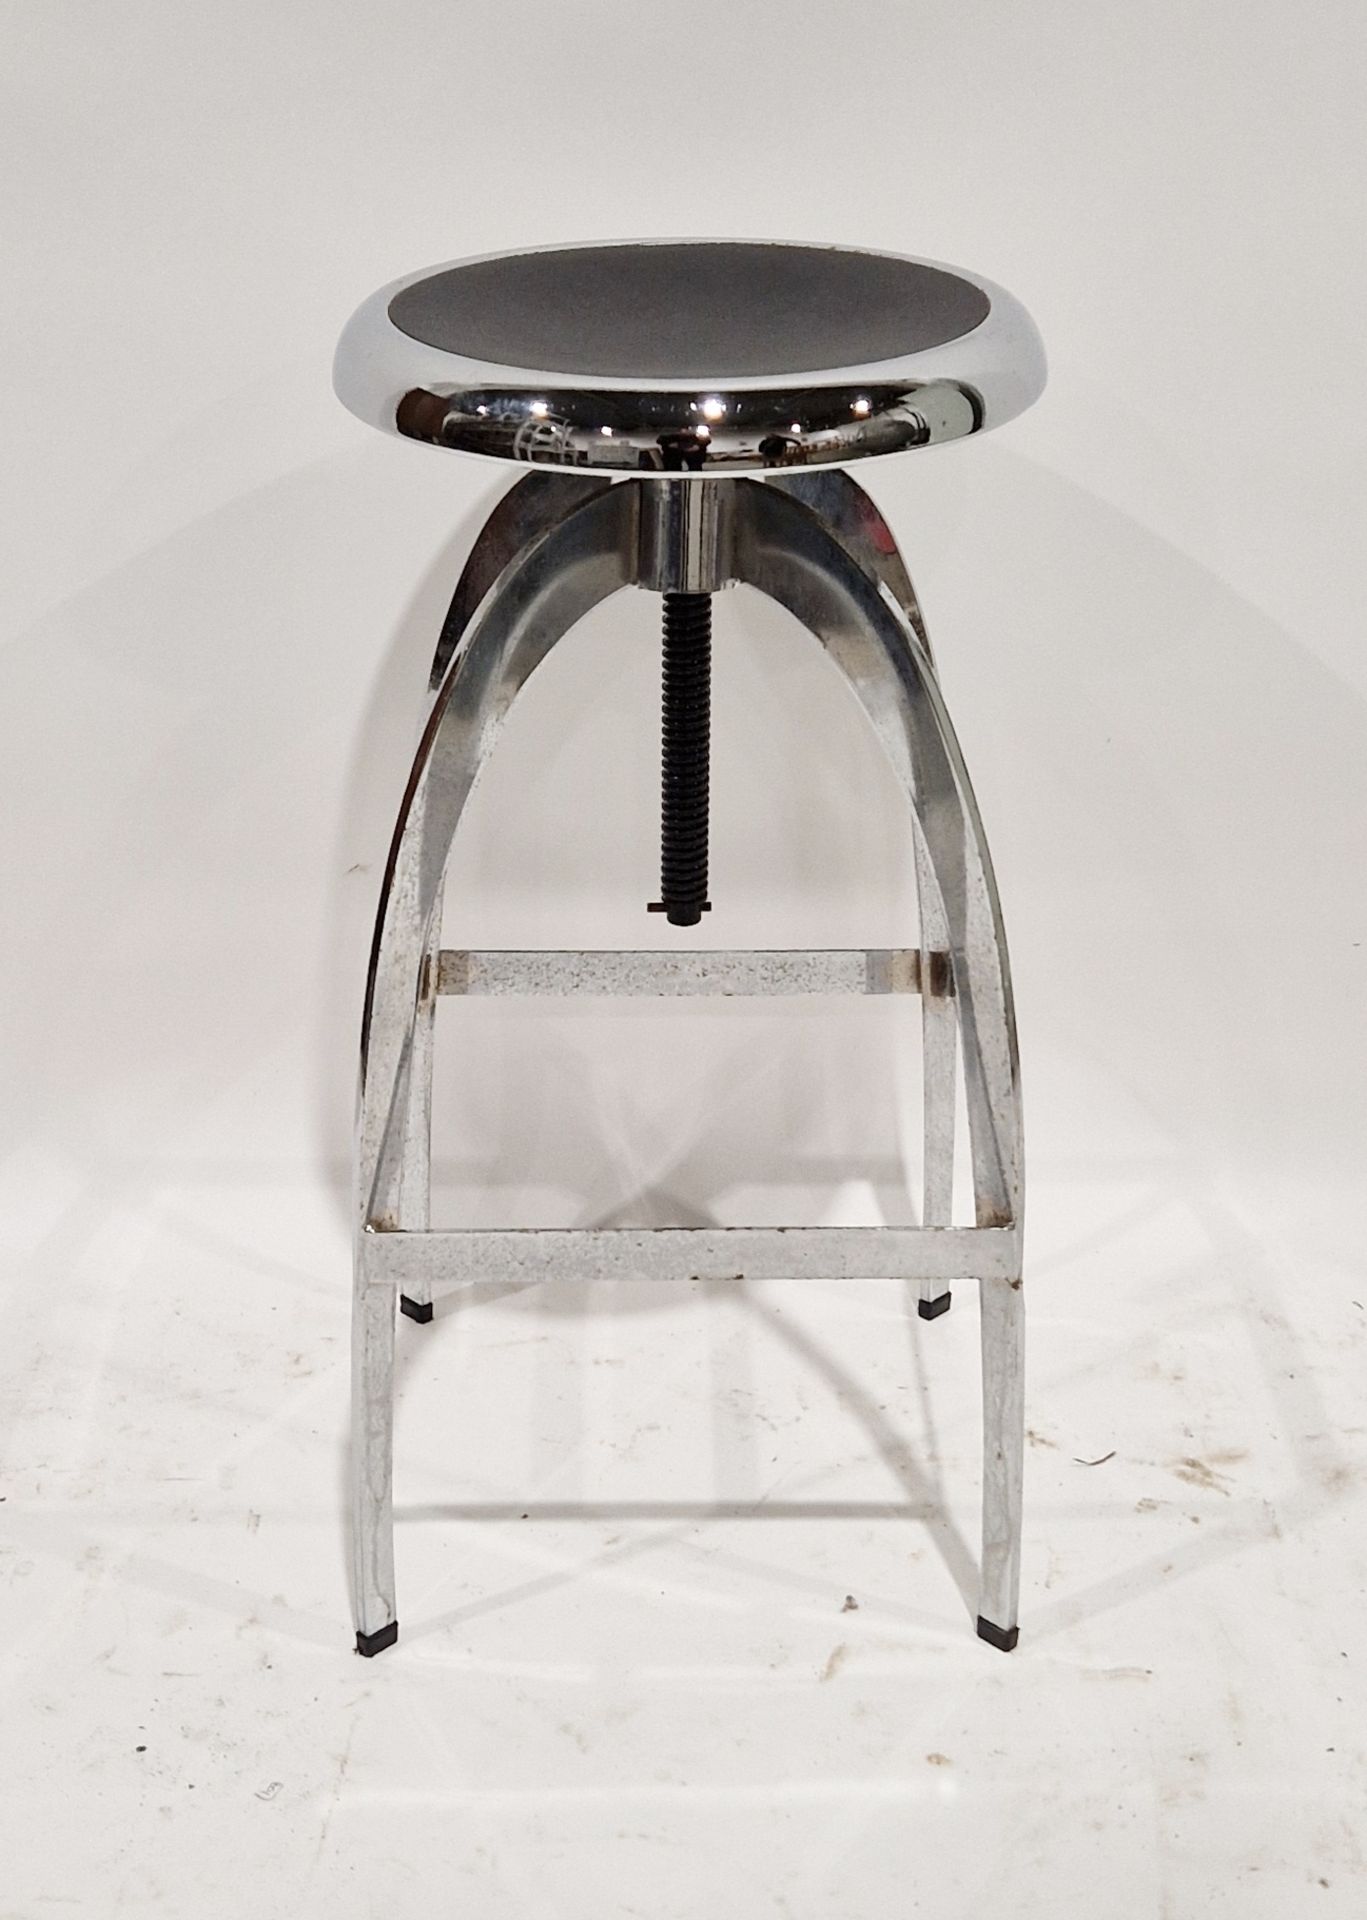 Modern chrome adjustable bar stool, 68cm high - Image 2 of 4